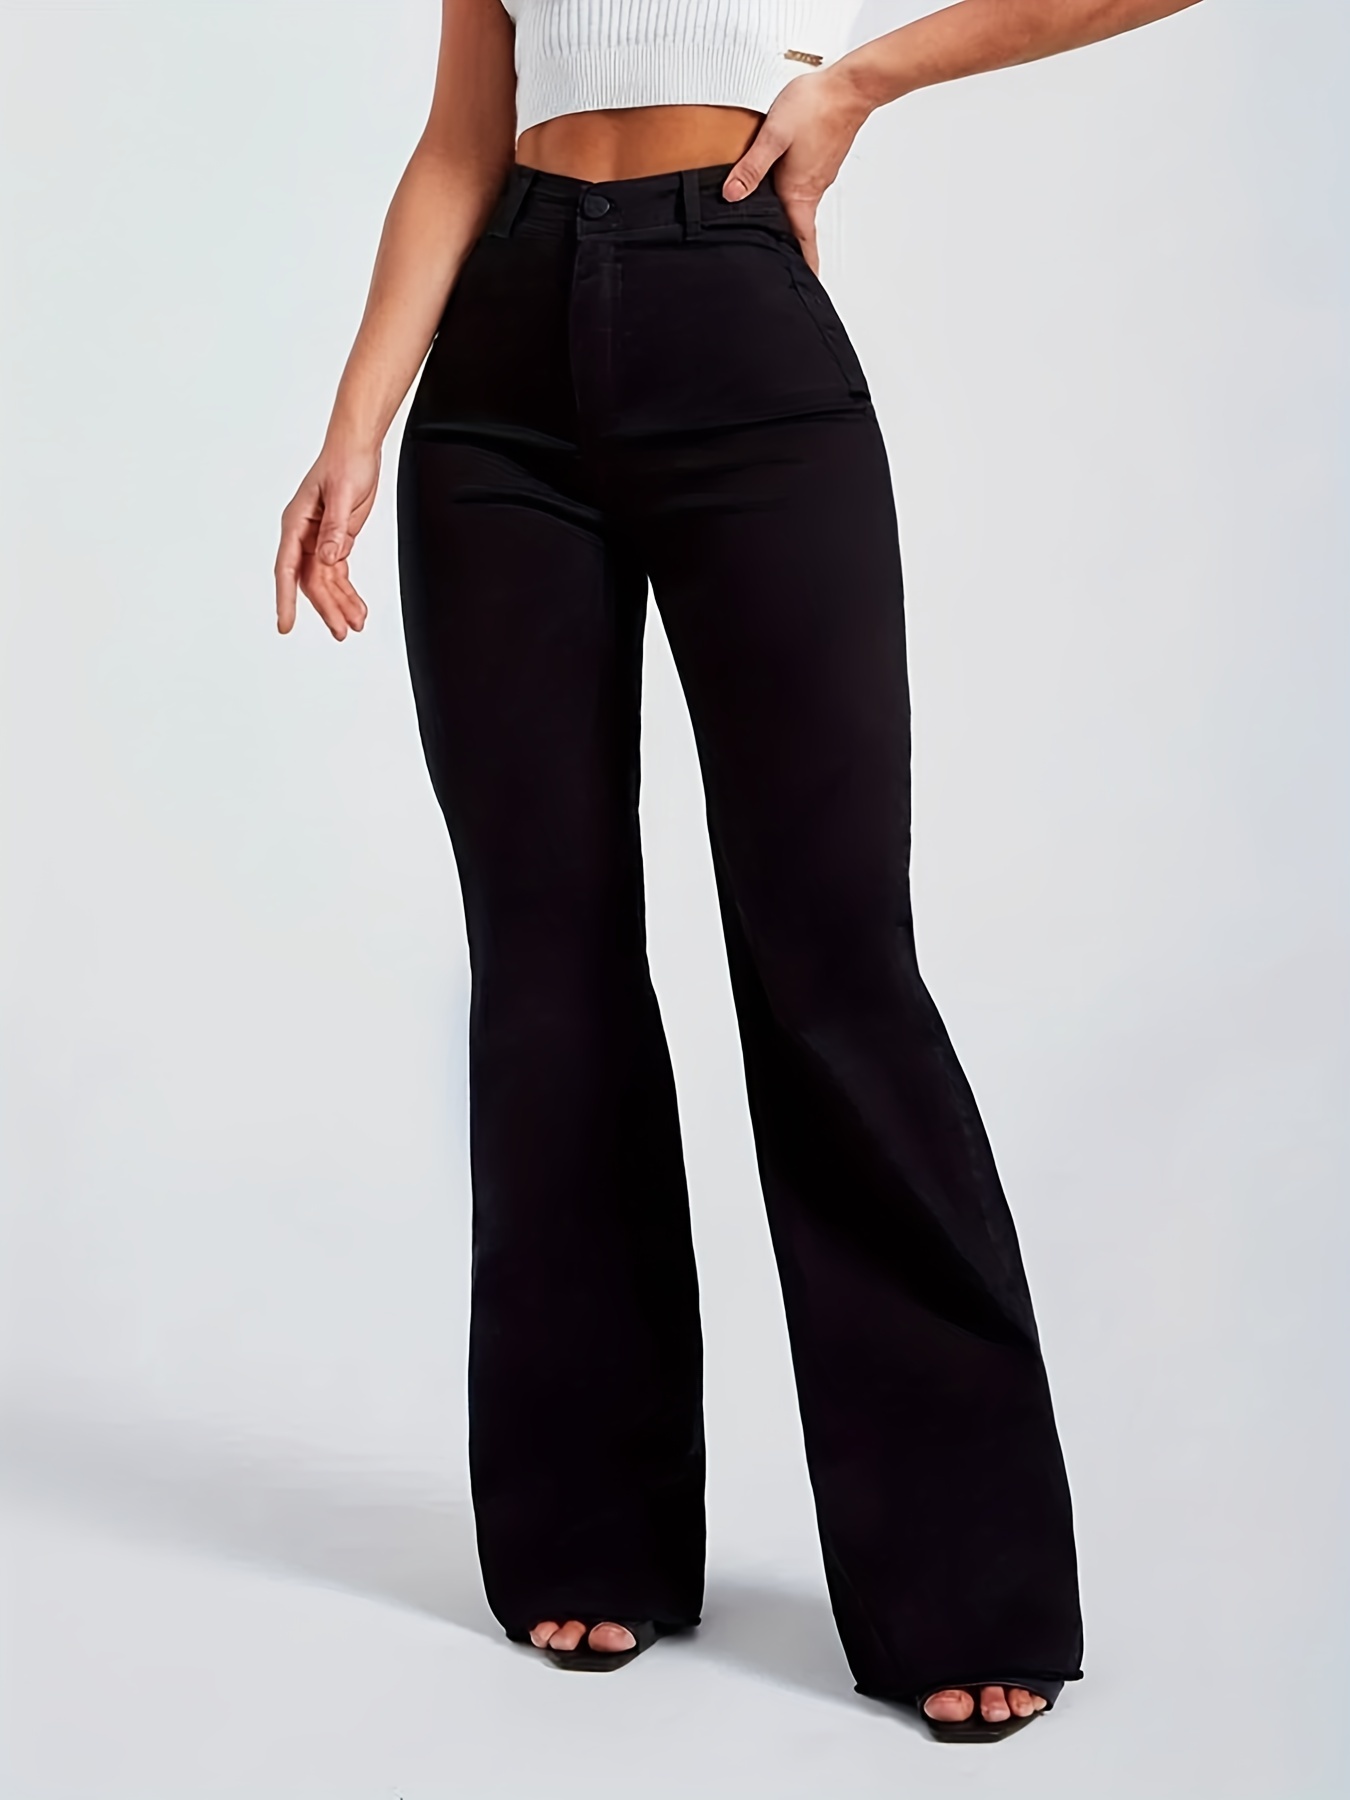 Zip leggings black  How to hem pants, How to wear, Trousers women